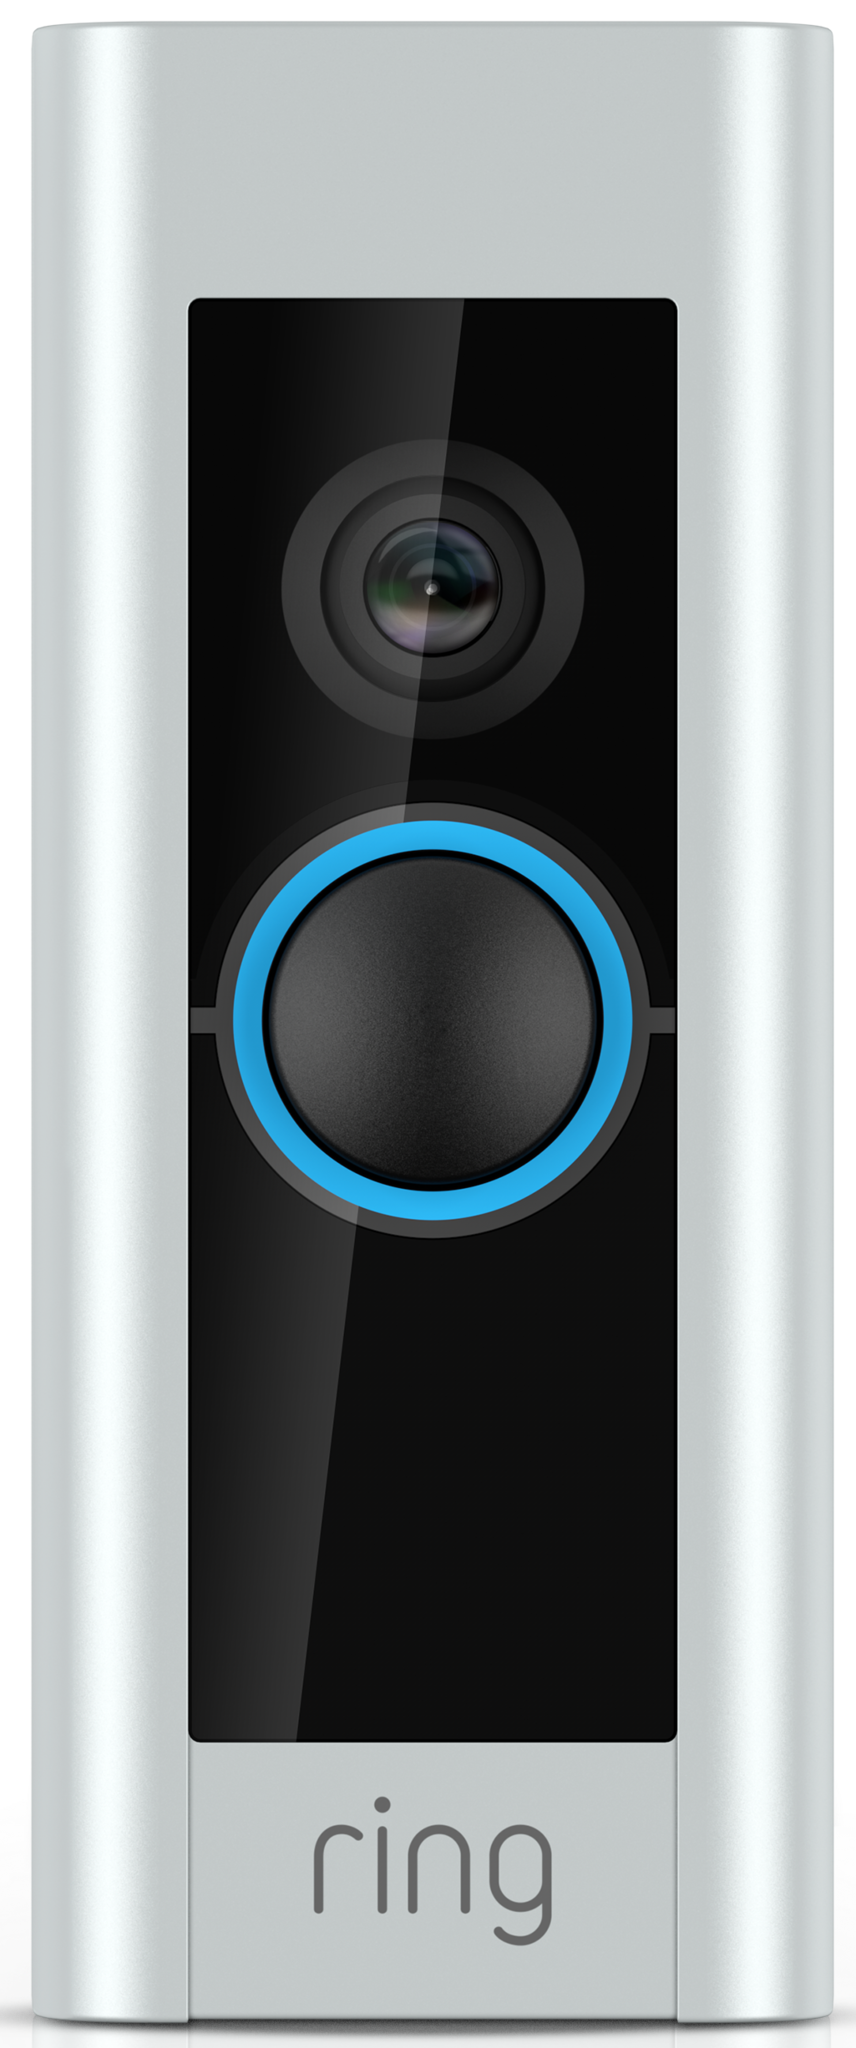 Ring Video Doorbell Pro official render